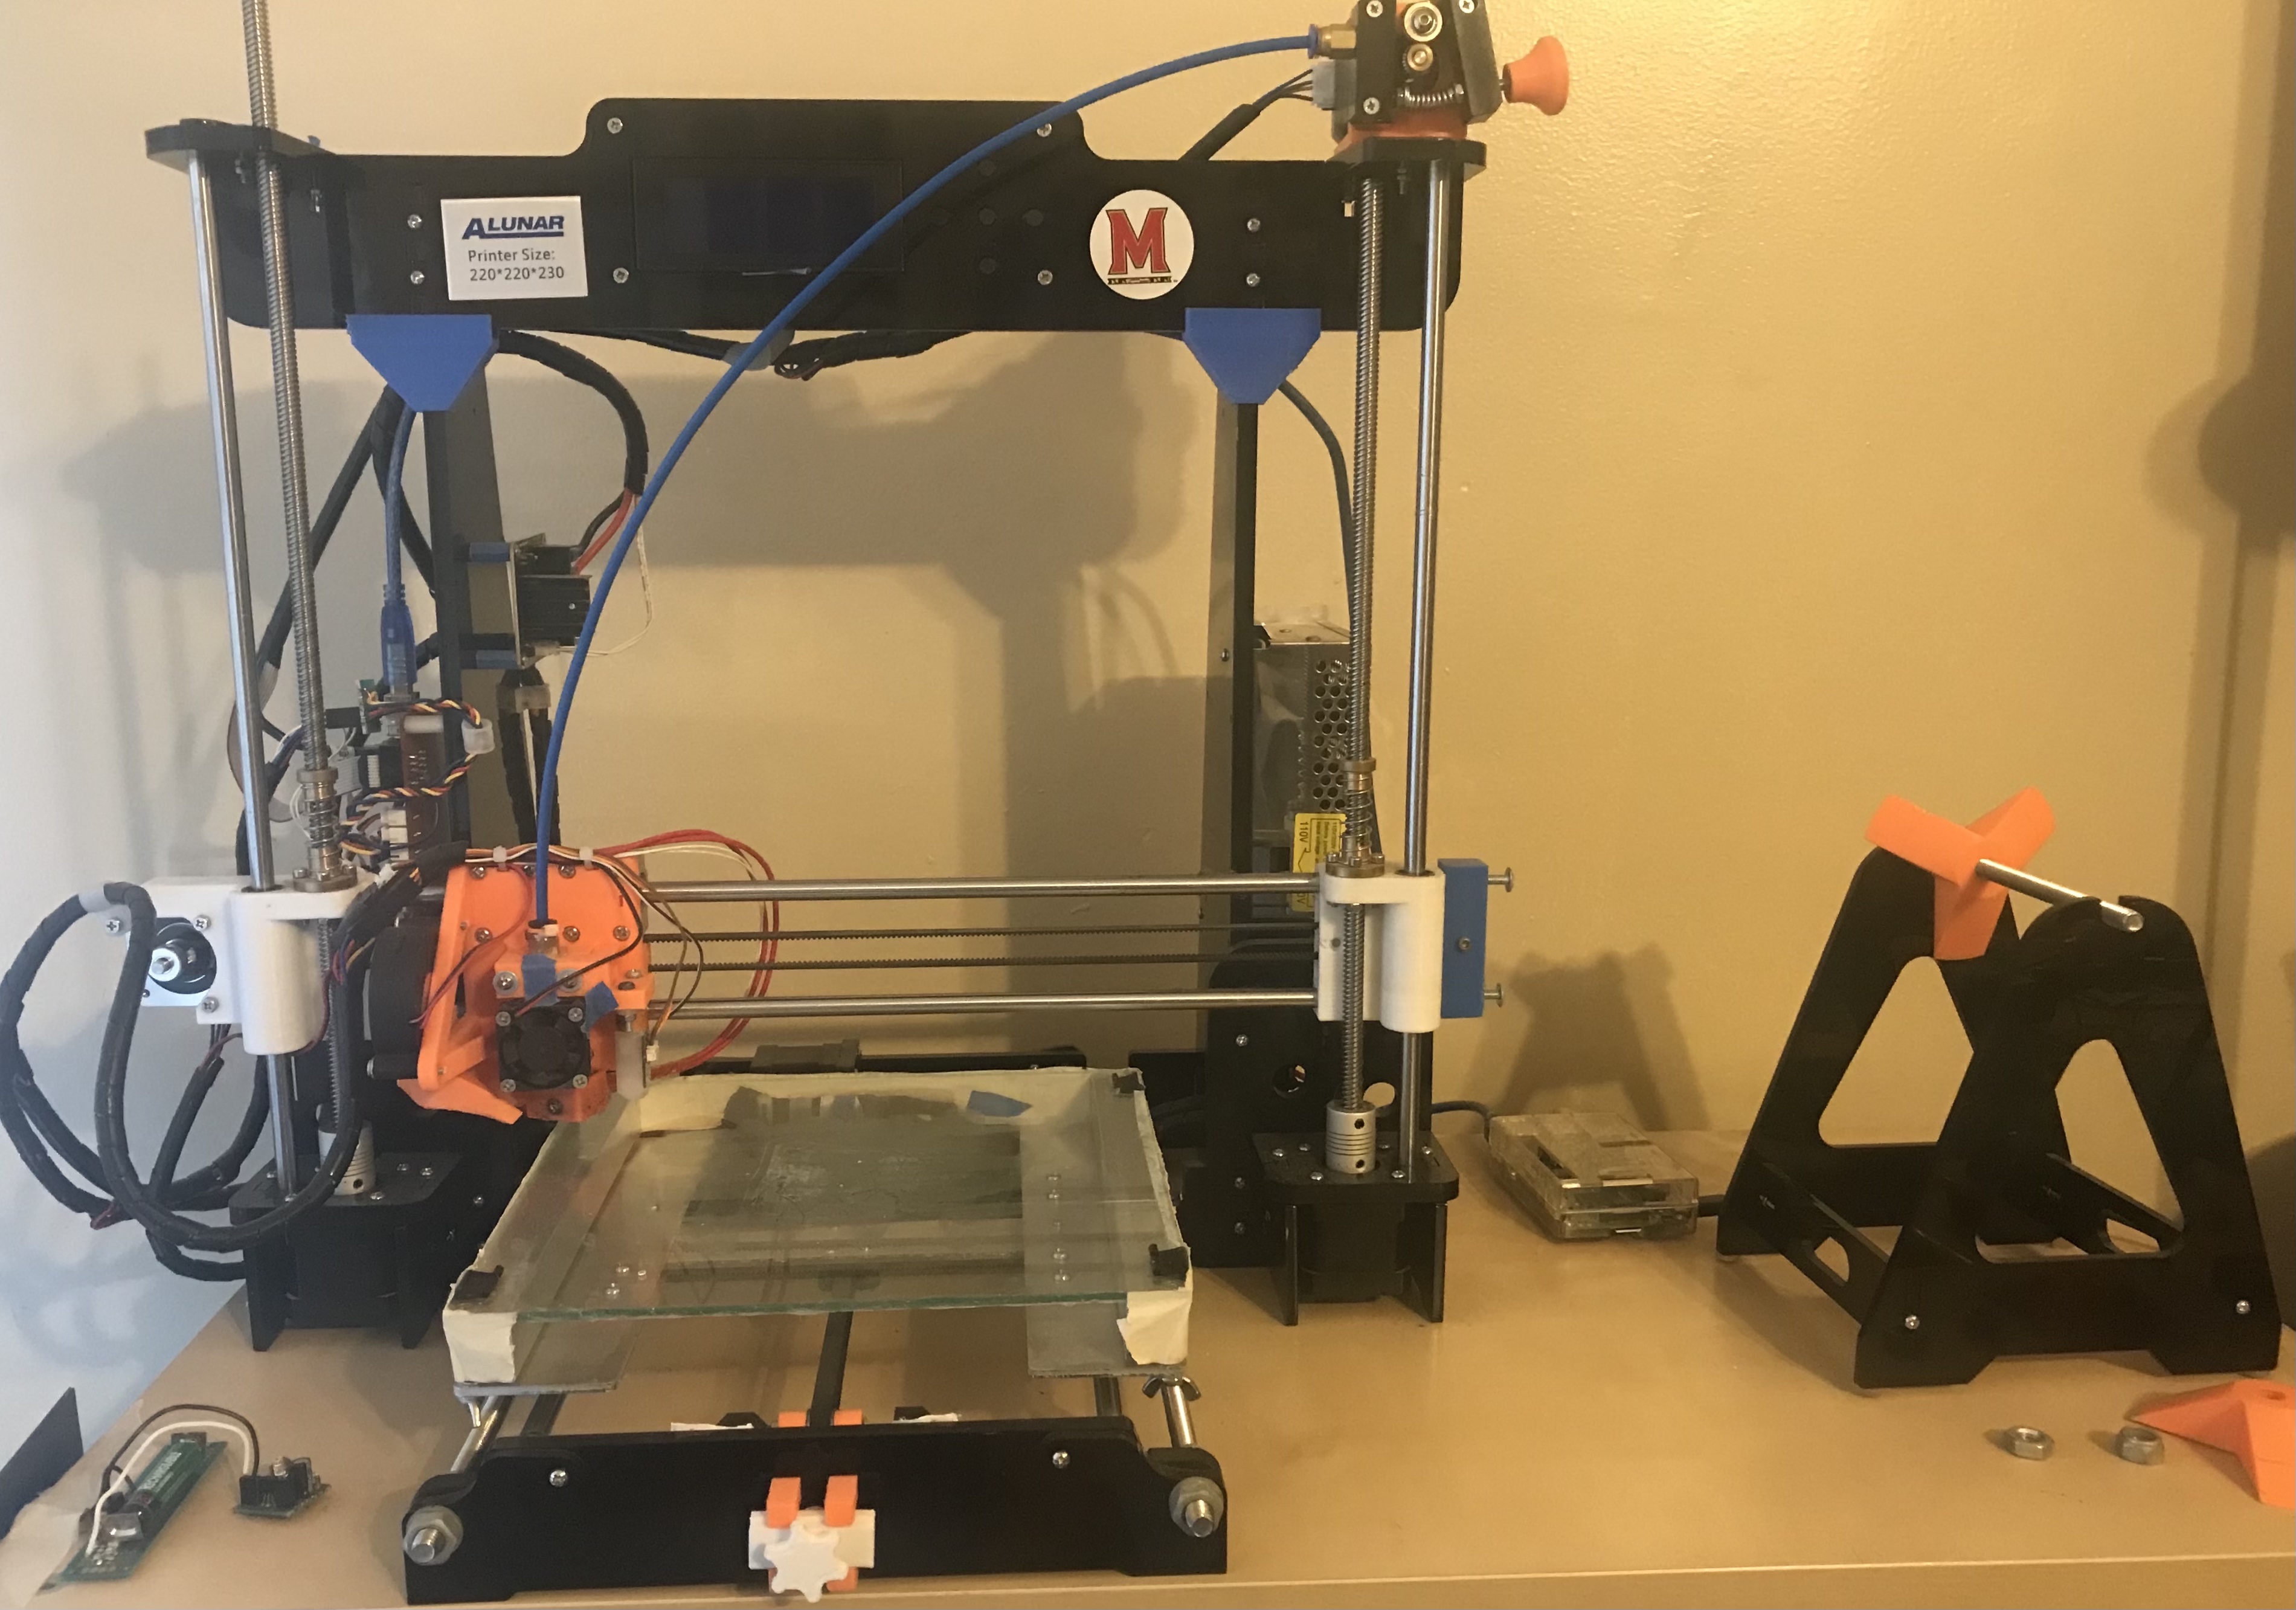 My 3D printer